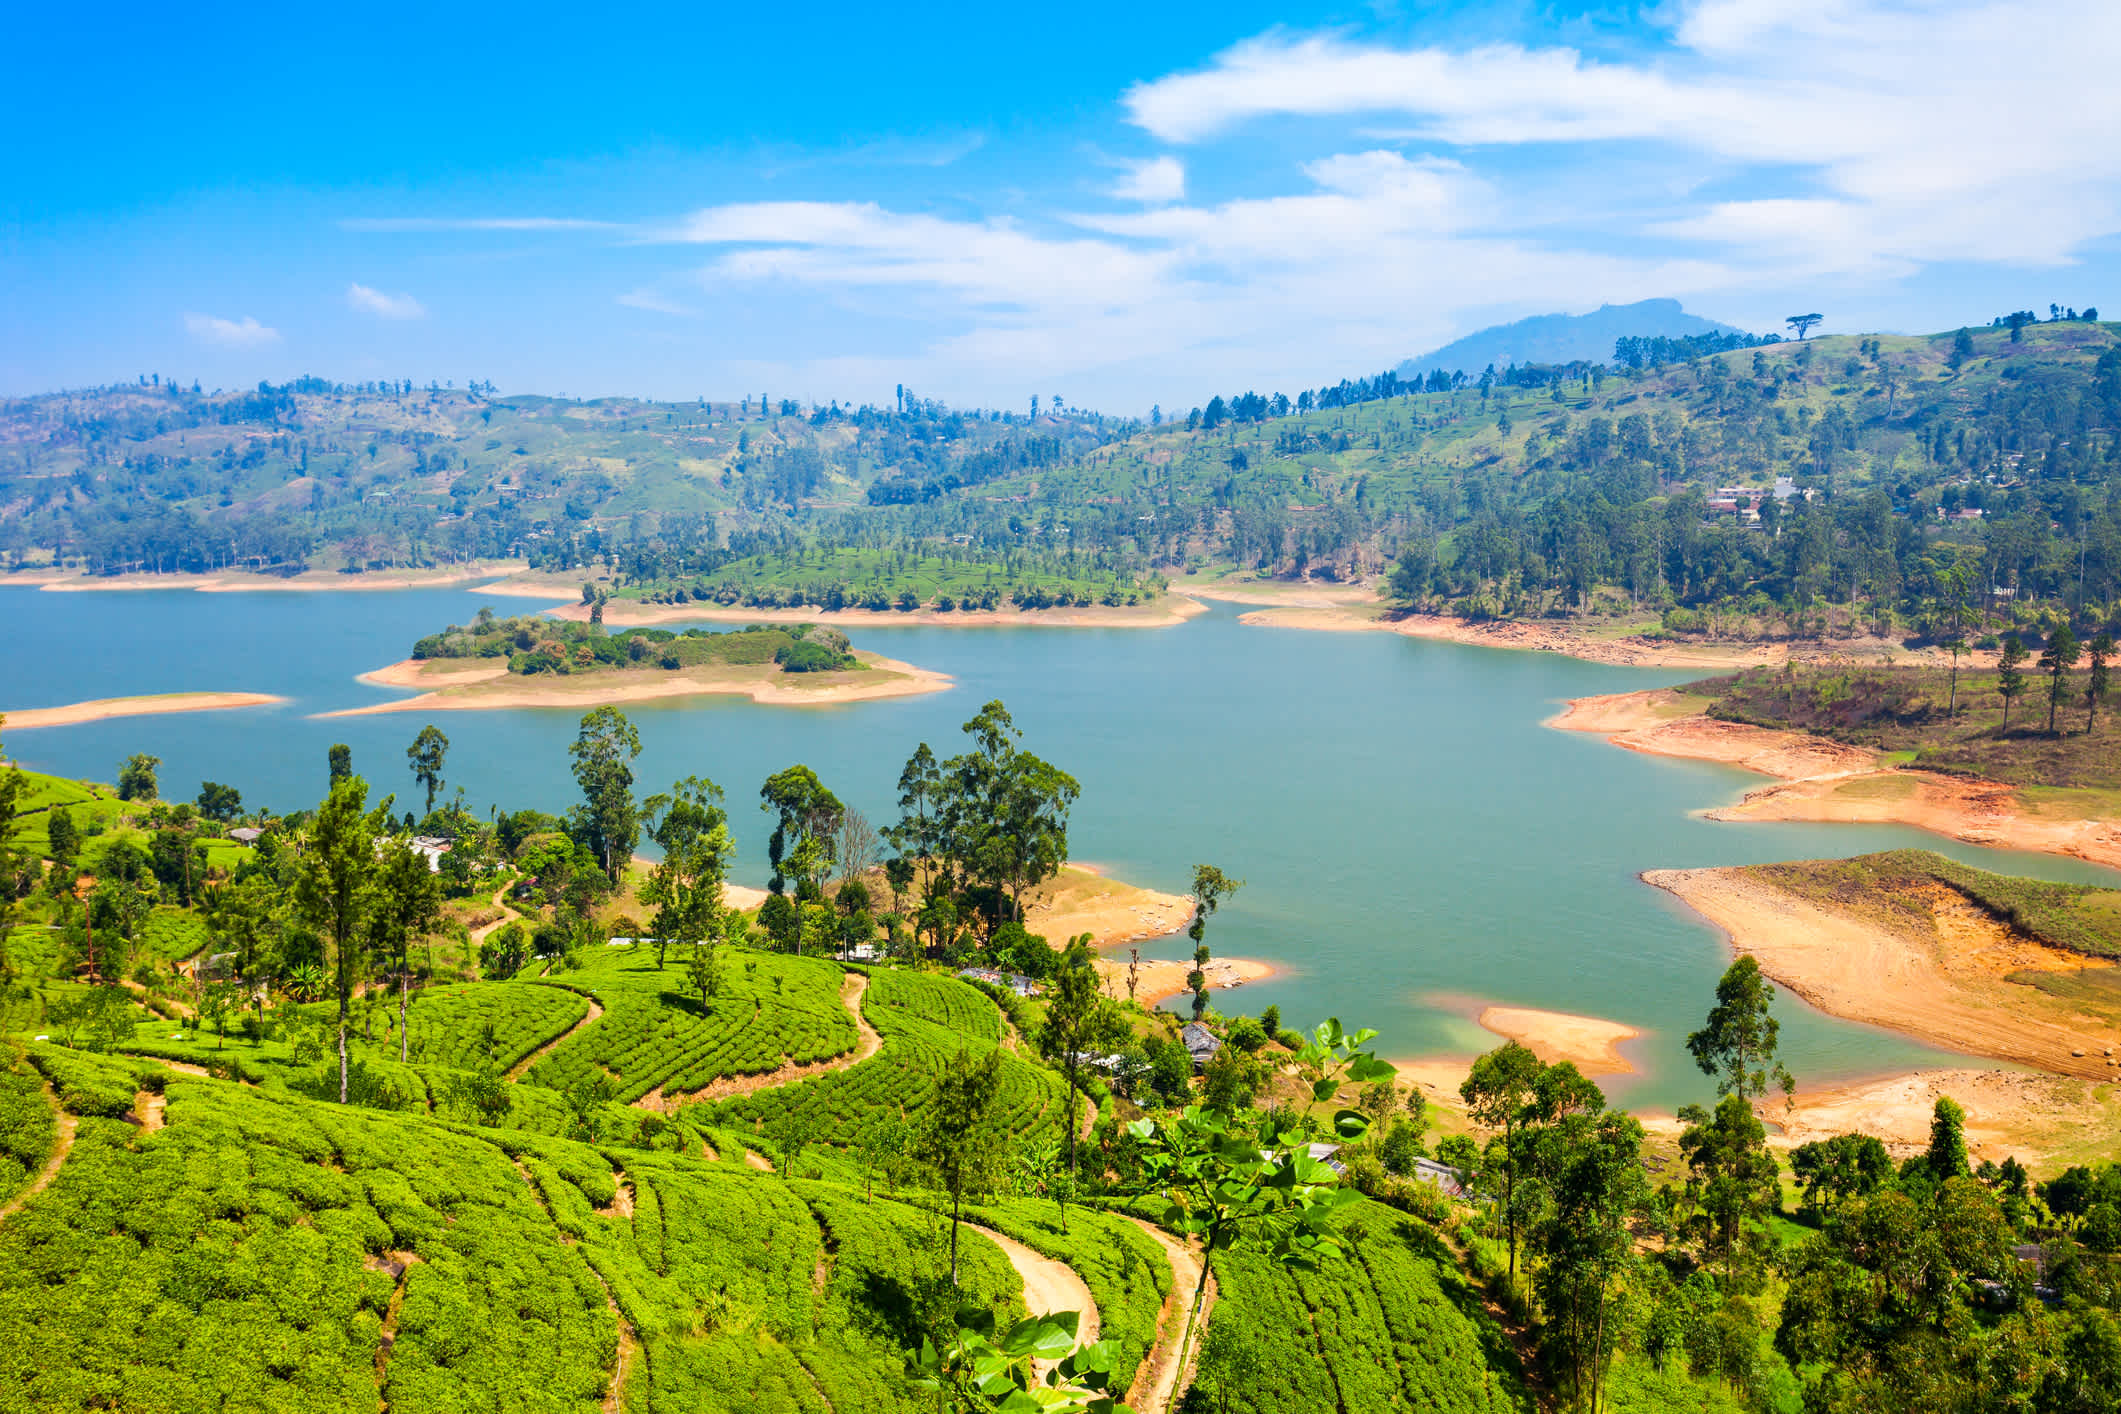 Vue aérienne des plantations de thé et du lac Maskeliya Dam près de Nuwara Eliya au Sri Lanka.